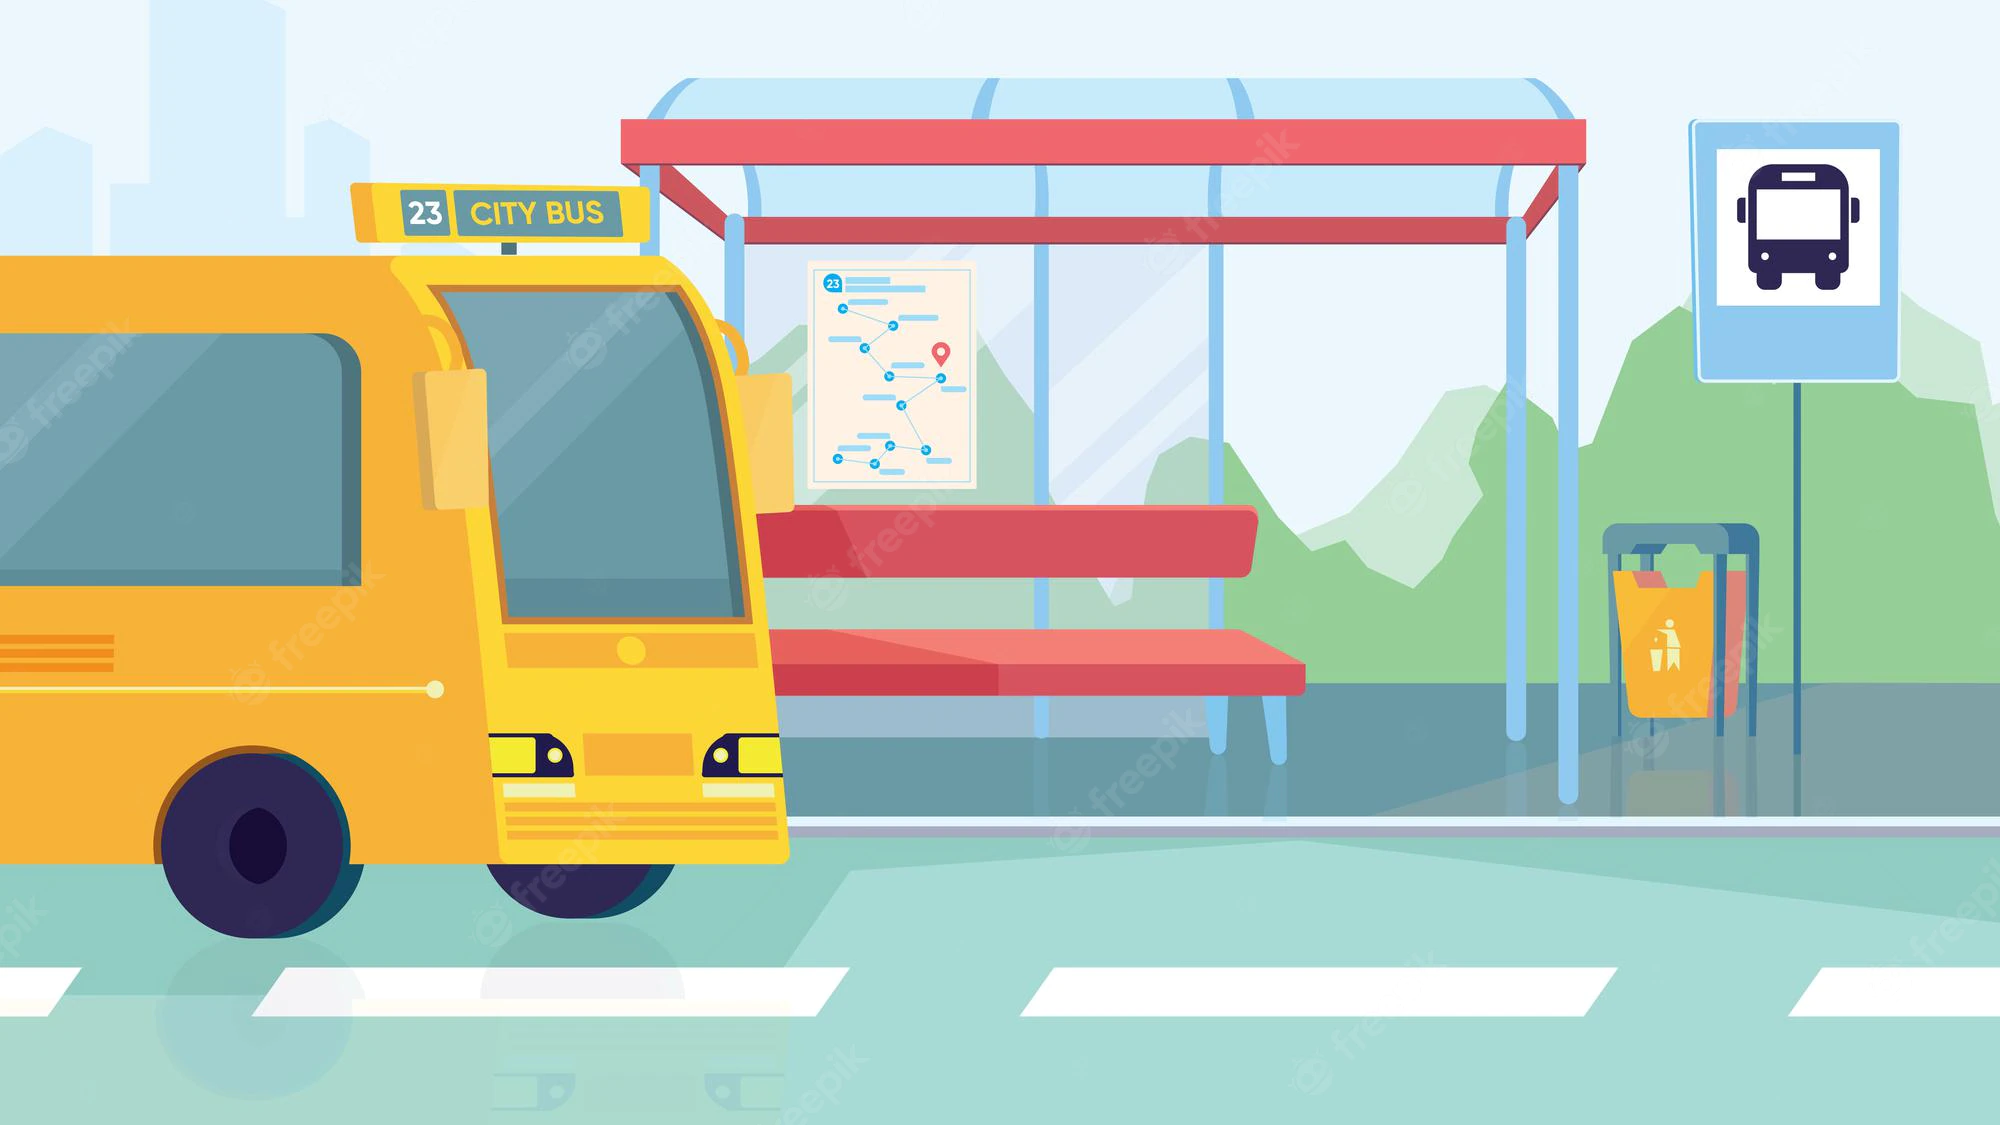 empty-bus-station-interior-banner-flat-cartoon-design-transport-stop-seats-yellow-city-bus-modern-public-urban-transportation-infrastructure-concept-vector-illustration-web-background_198565-1048